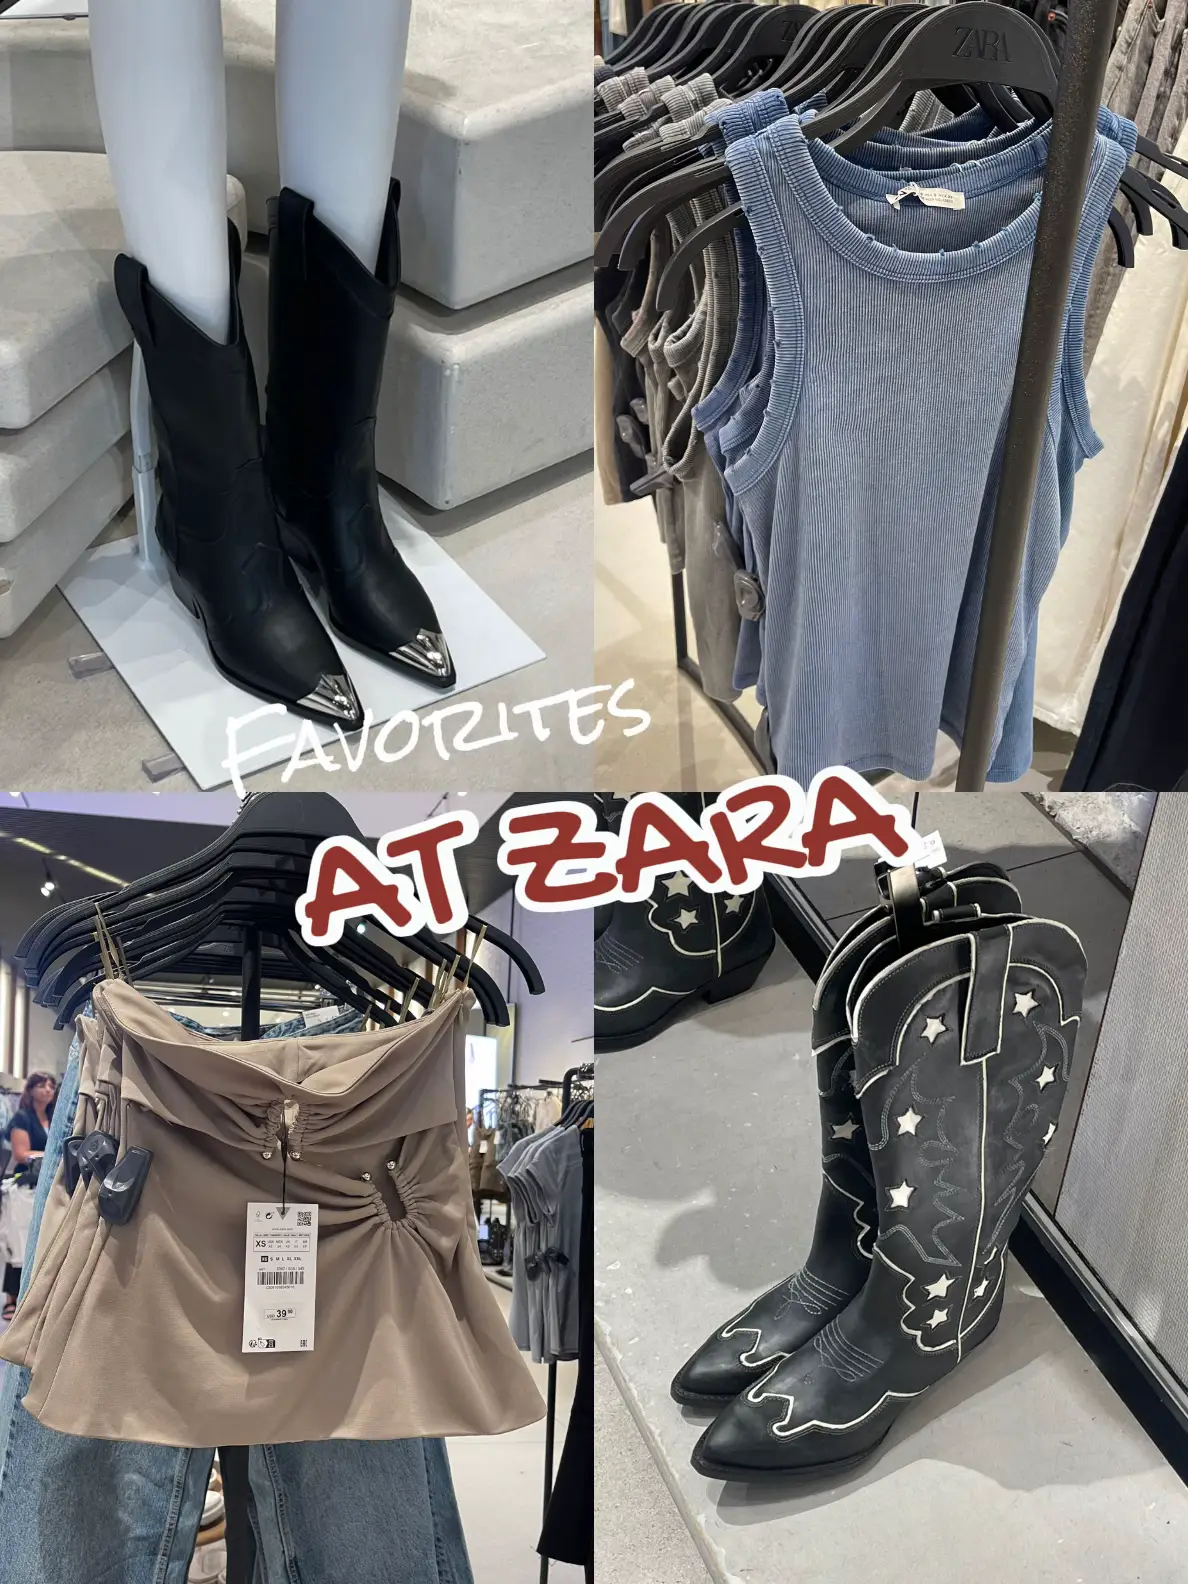 Zara Leather Trousers — BAGGED